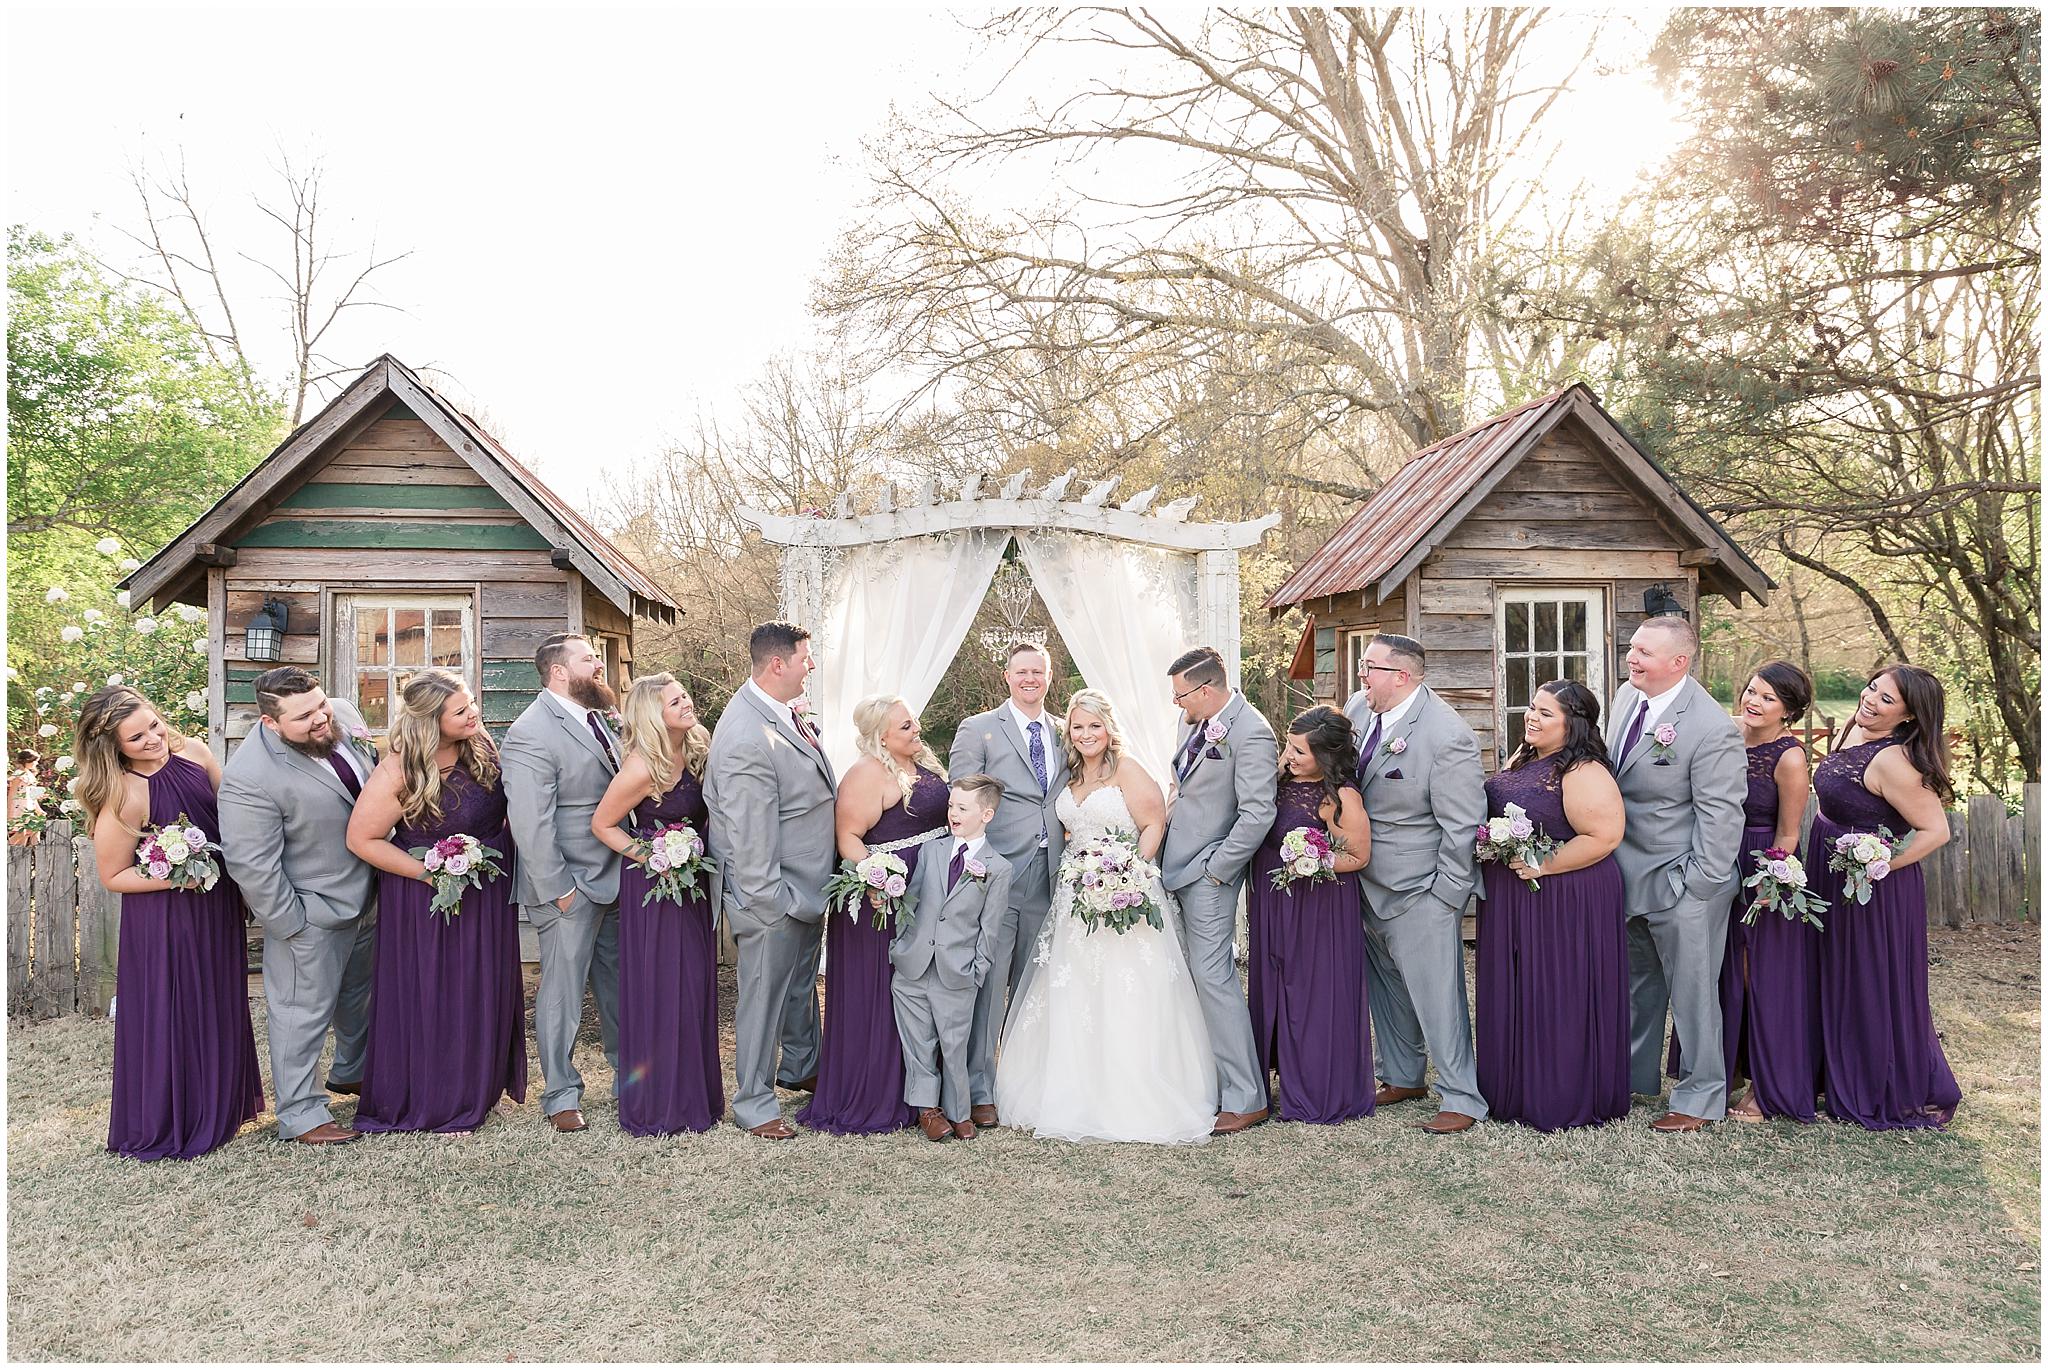 9 oaks farm wedding party bridesmaids groomsmen purple gray suits_0002.jpg